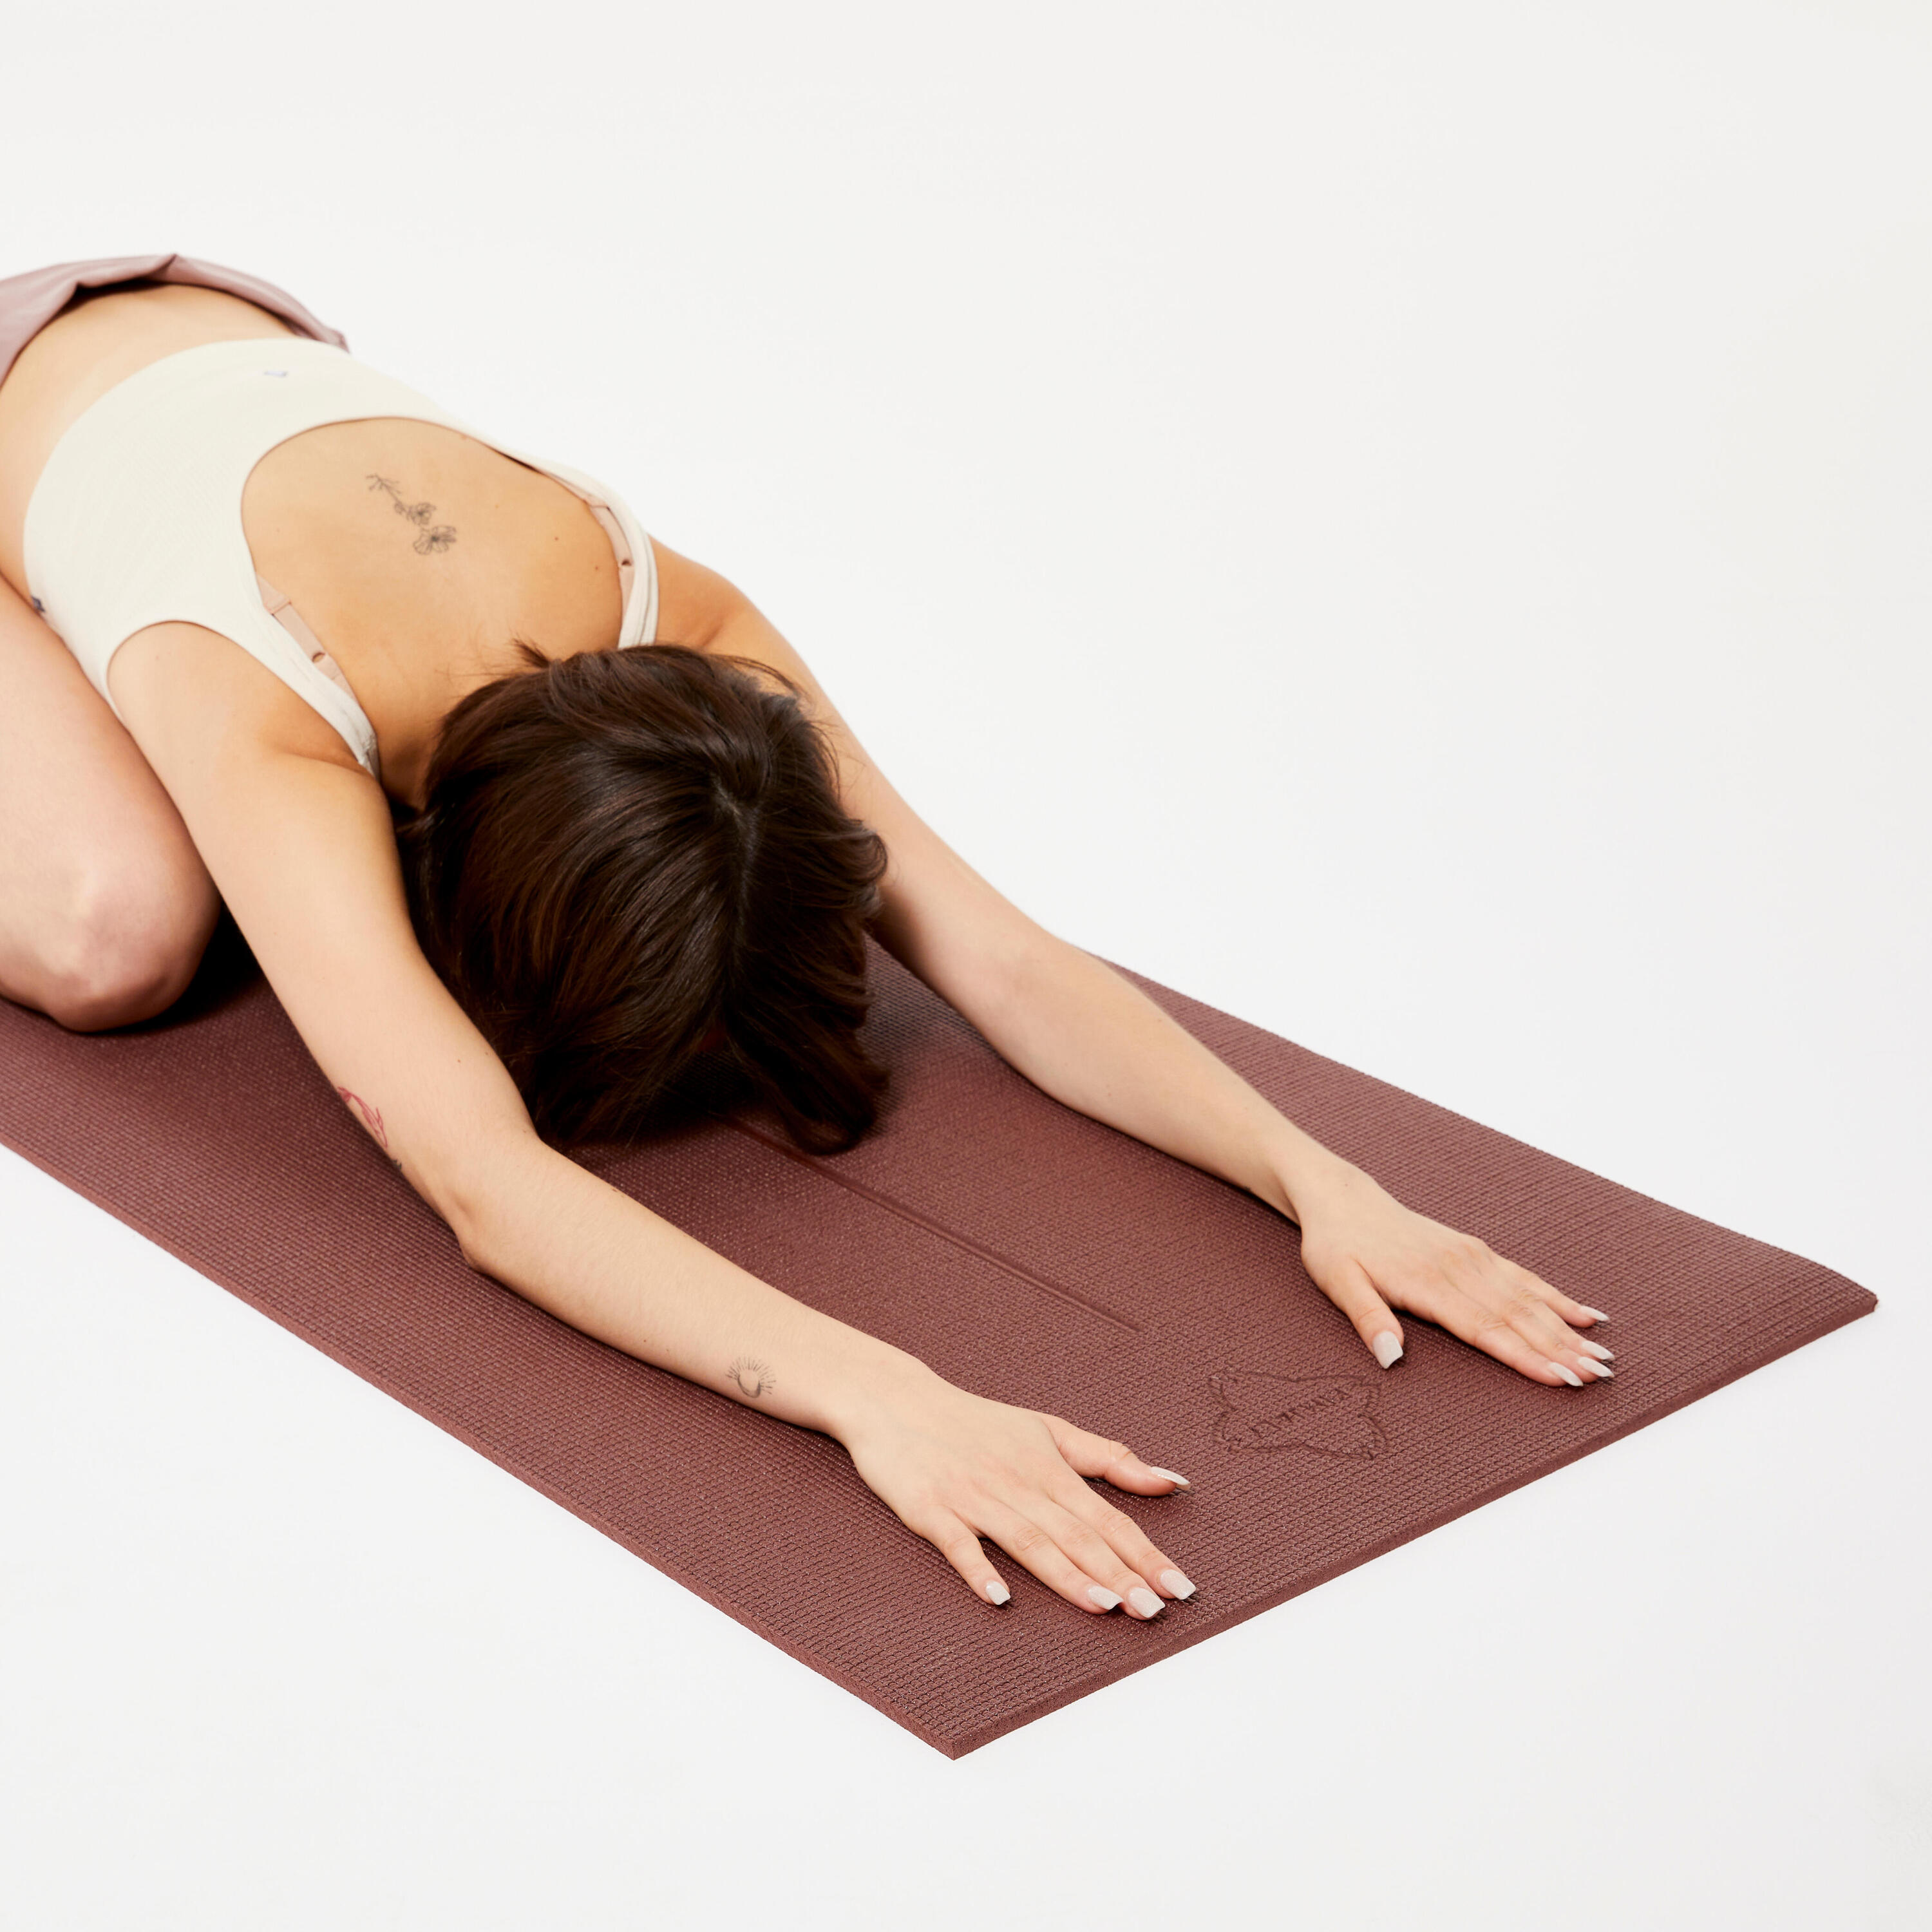 Gentle Yoga Comfort Mat 173 cm ⨯ 61 cm ⨯ 8 mm - Mahogany 3/4